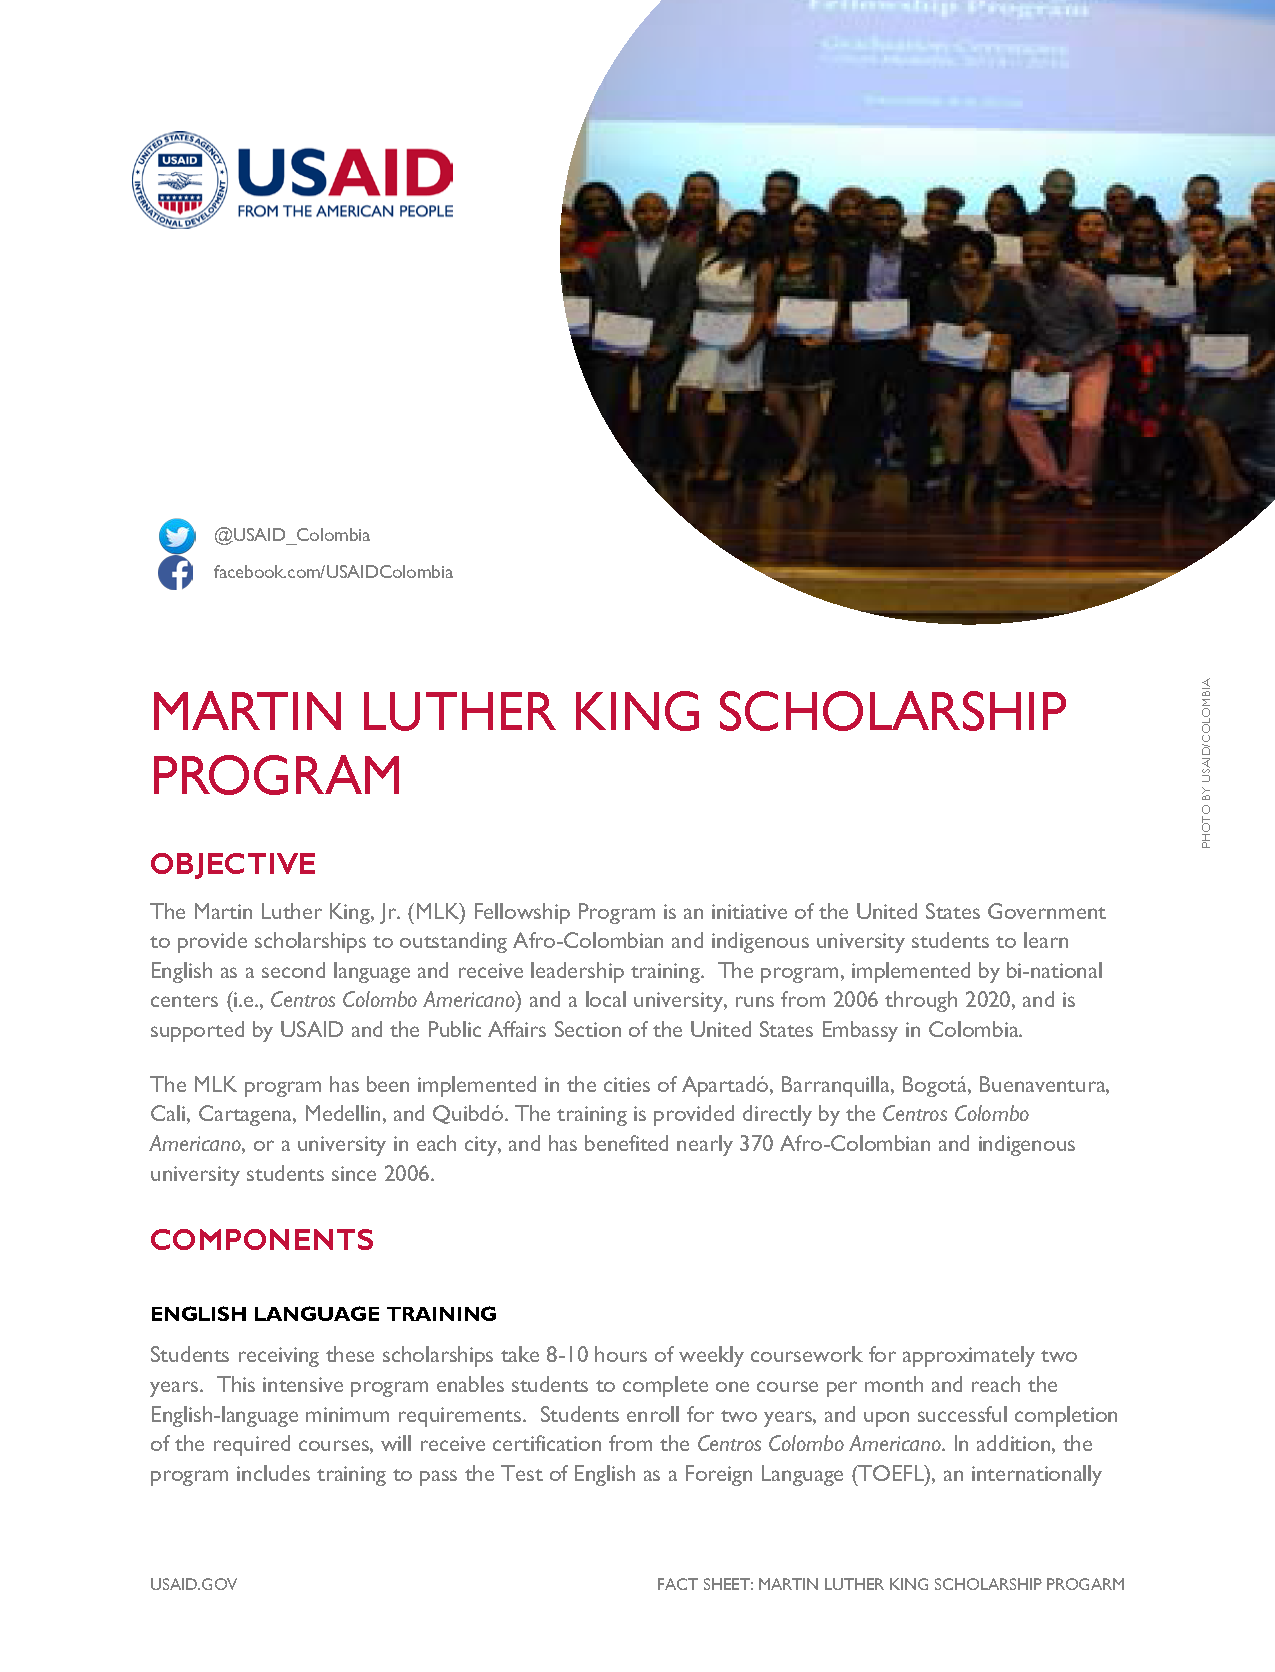 Martin Luther King Jr. Fellowship Program Fact Sheet